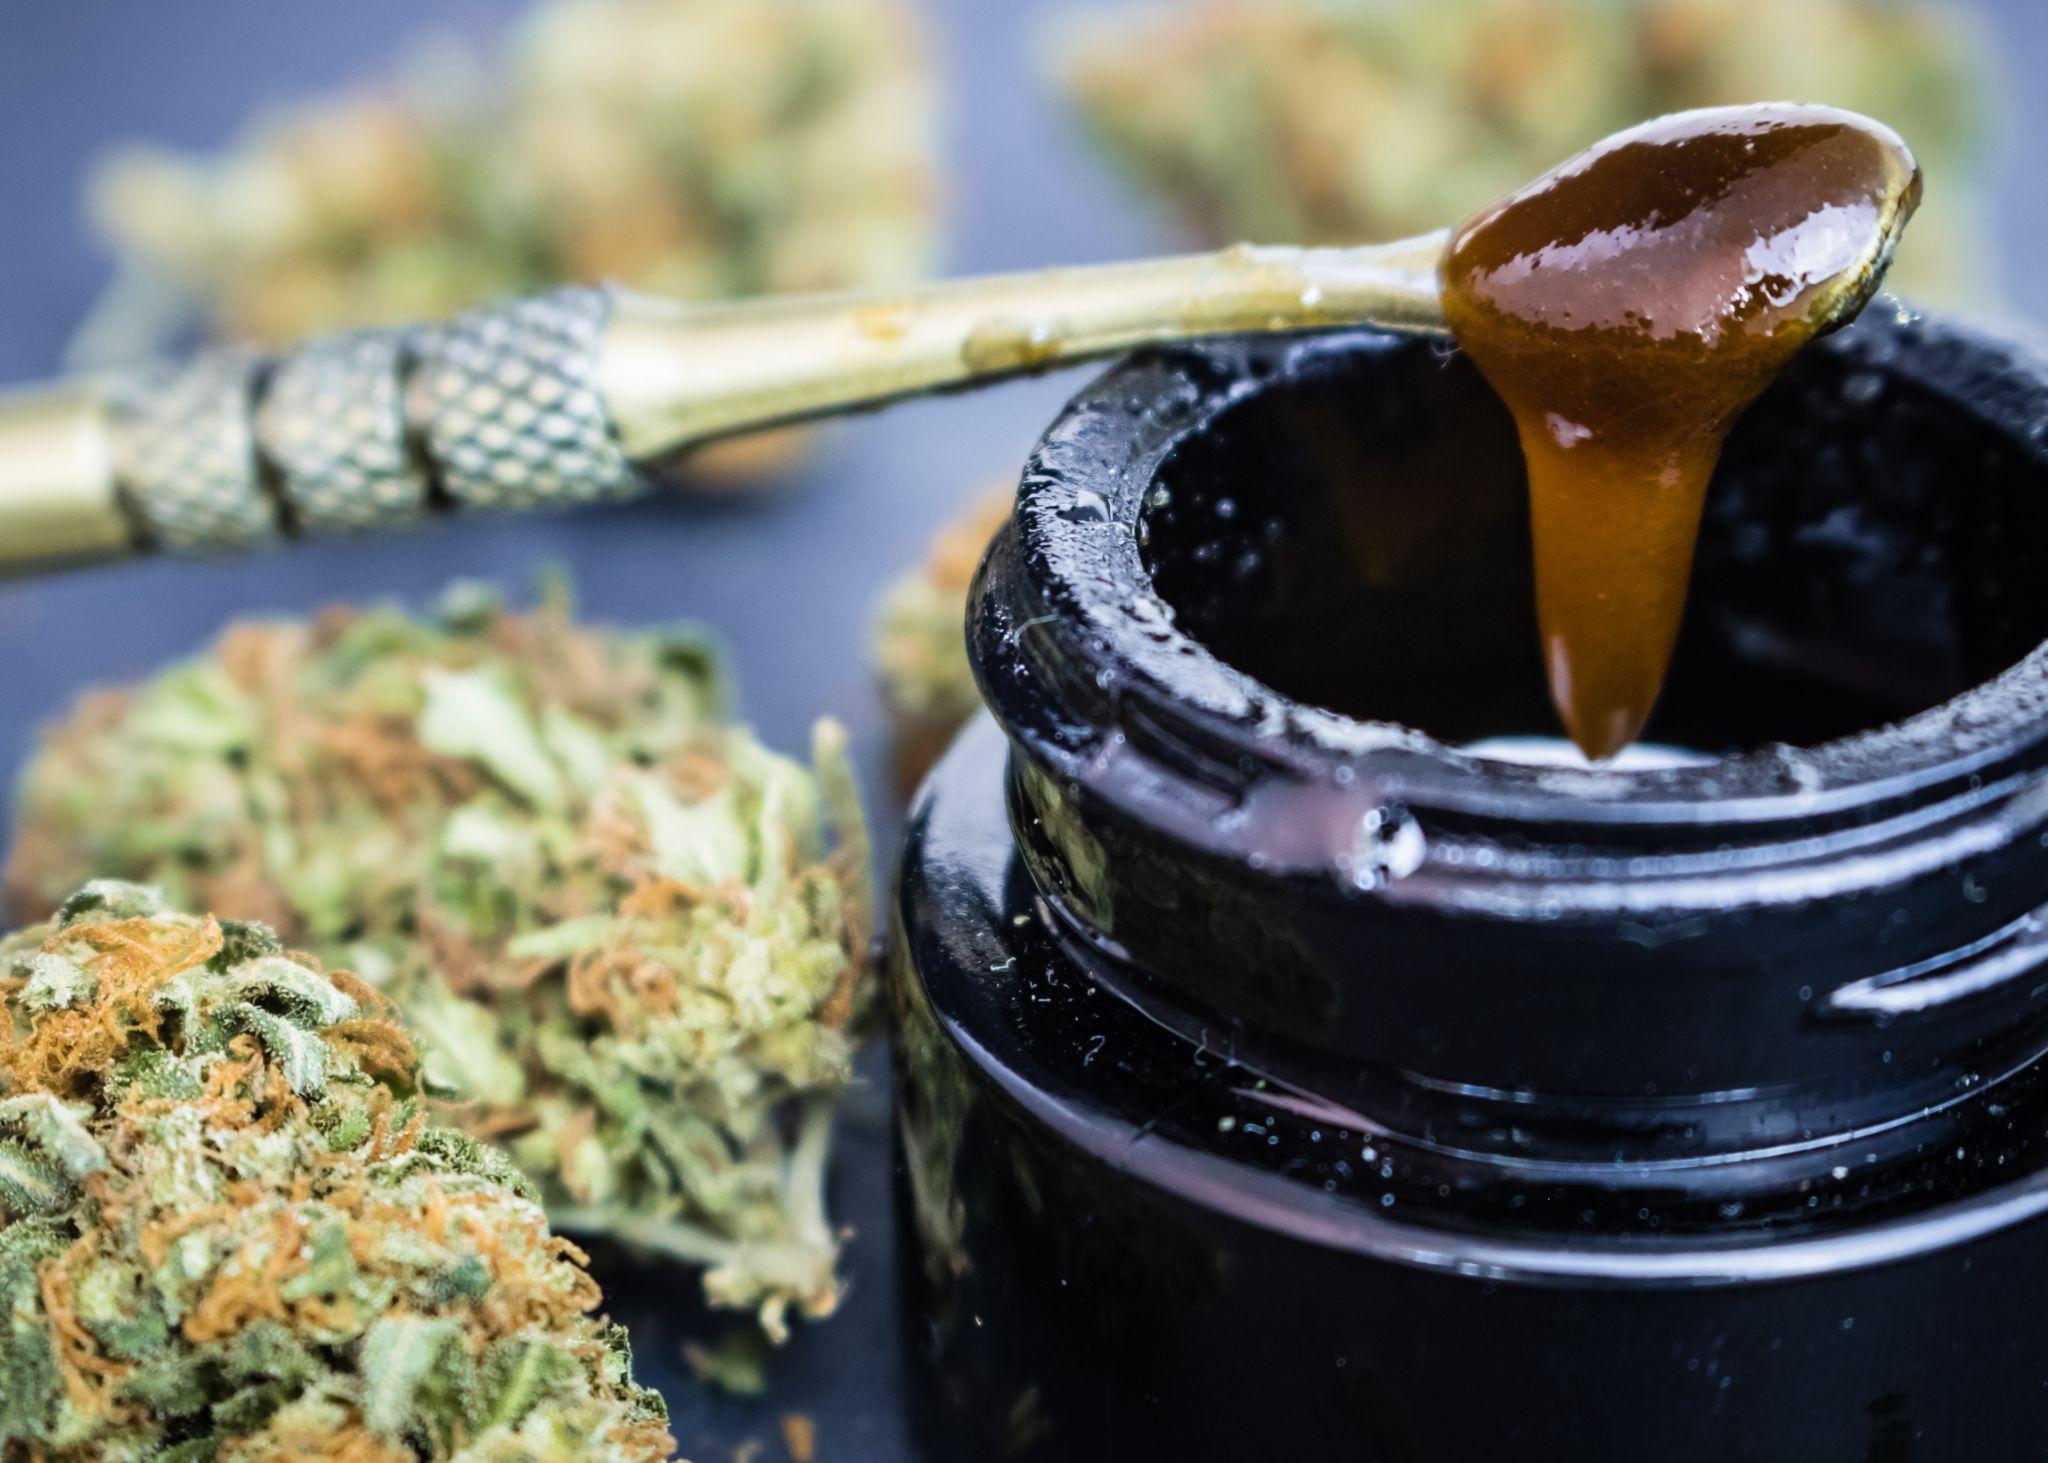 Marijuana buds with THC/CBD oil extract on dab tool